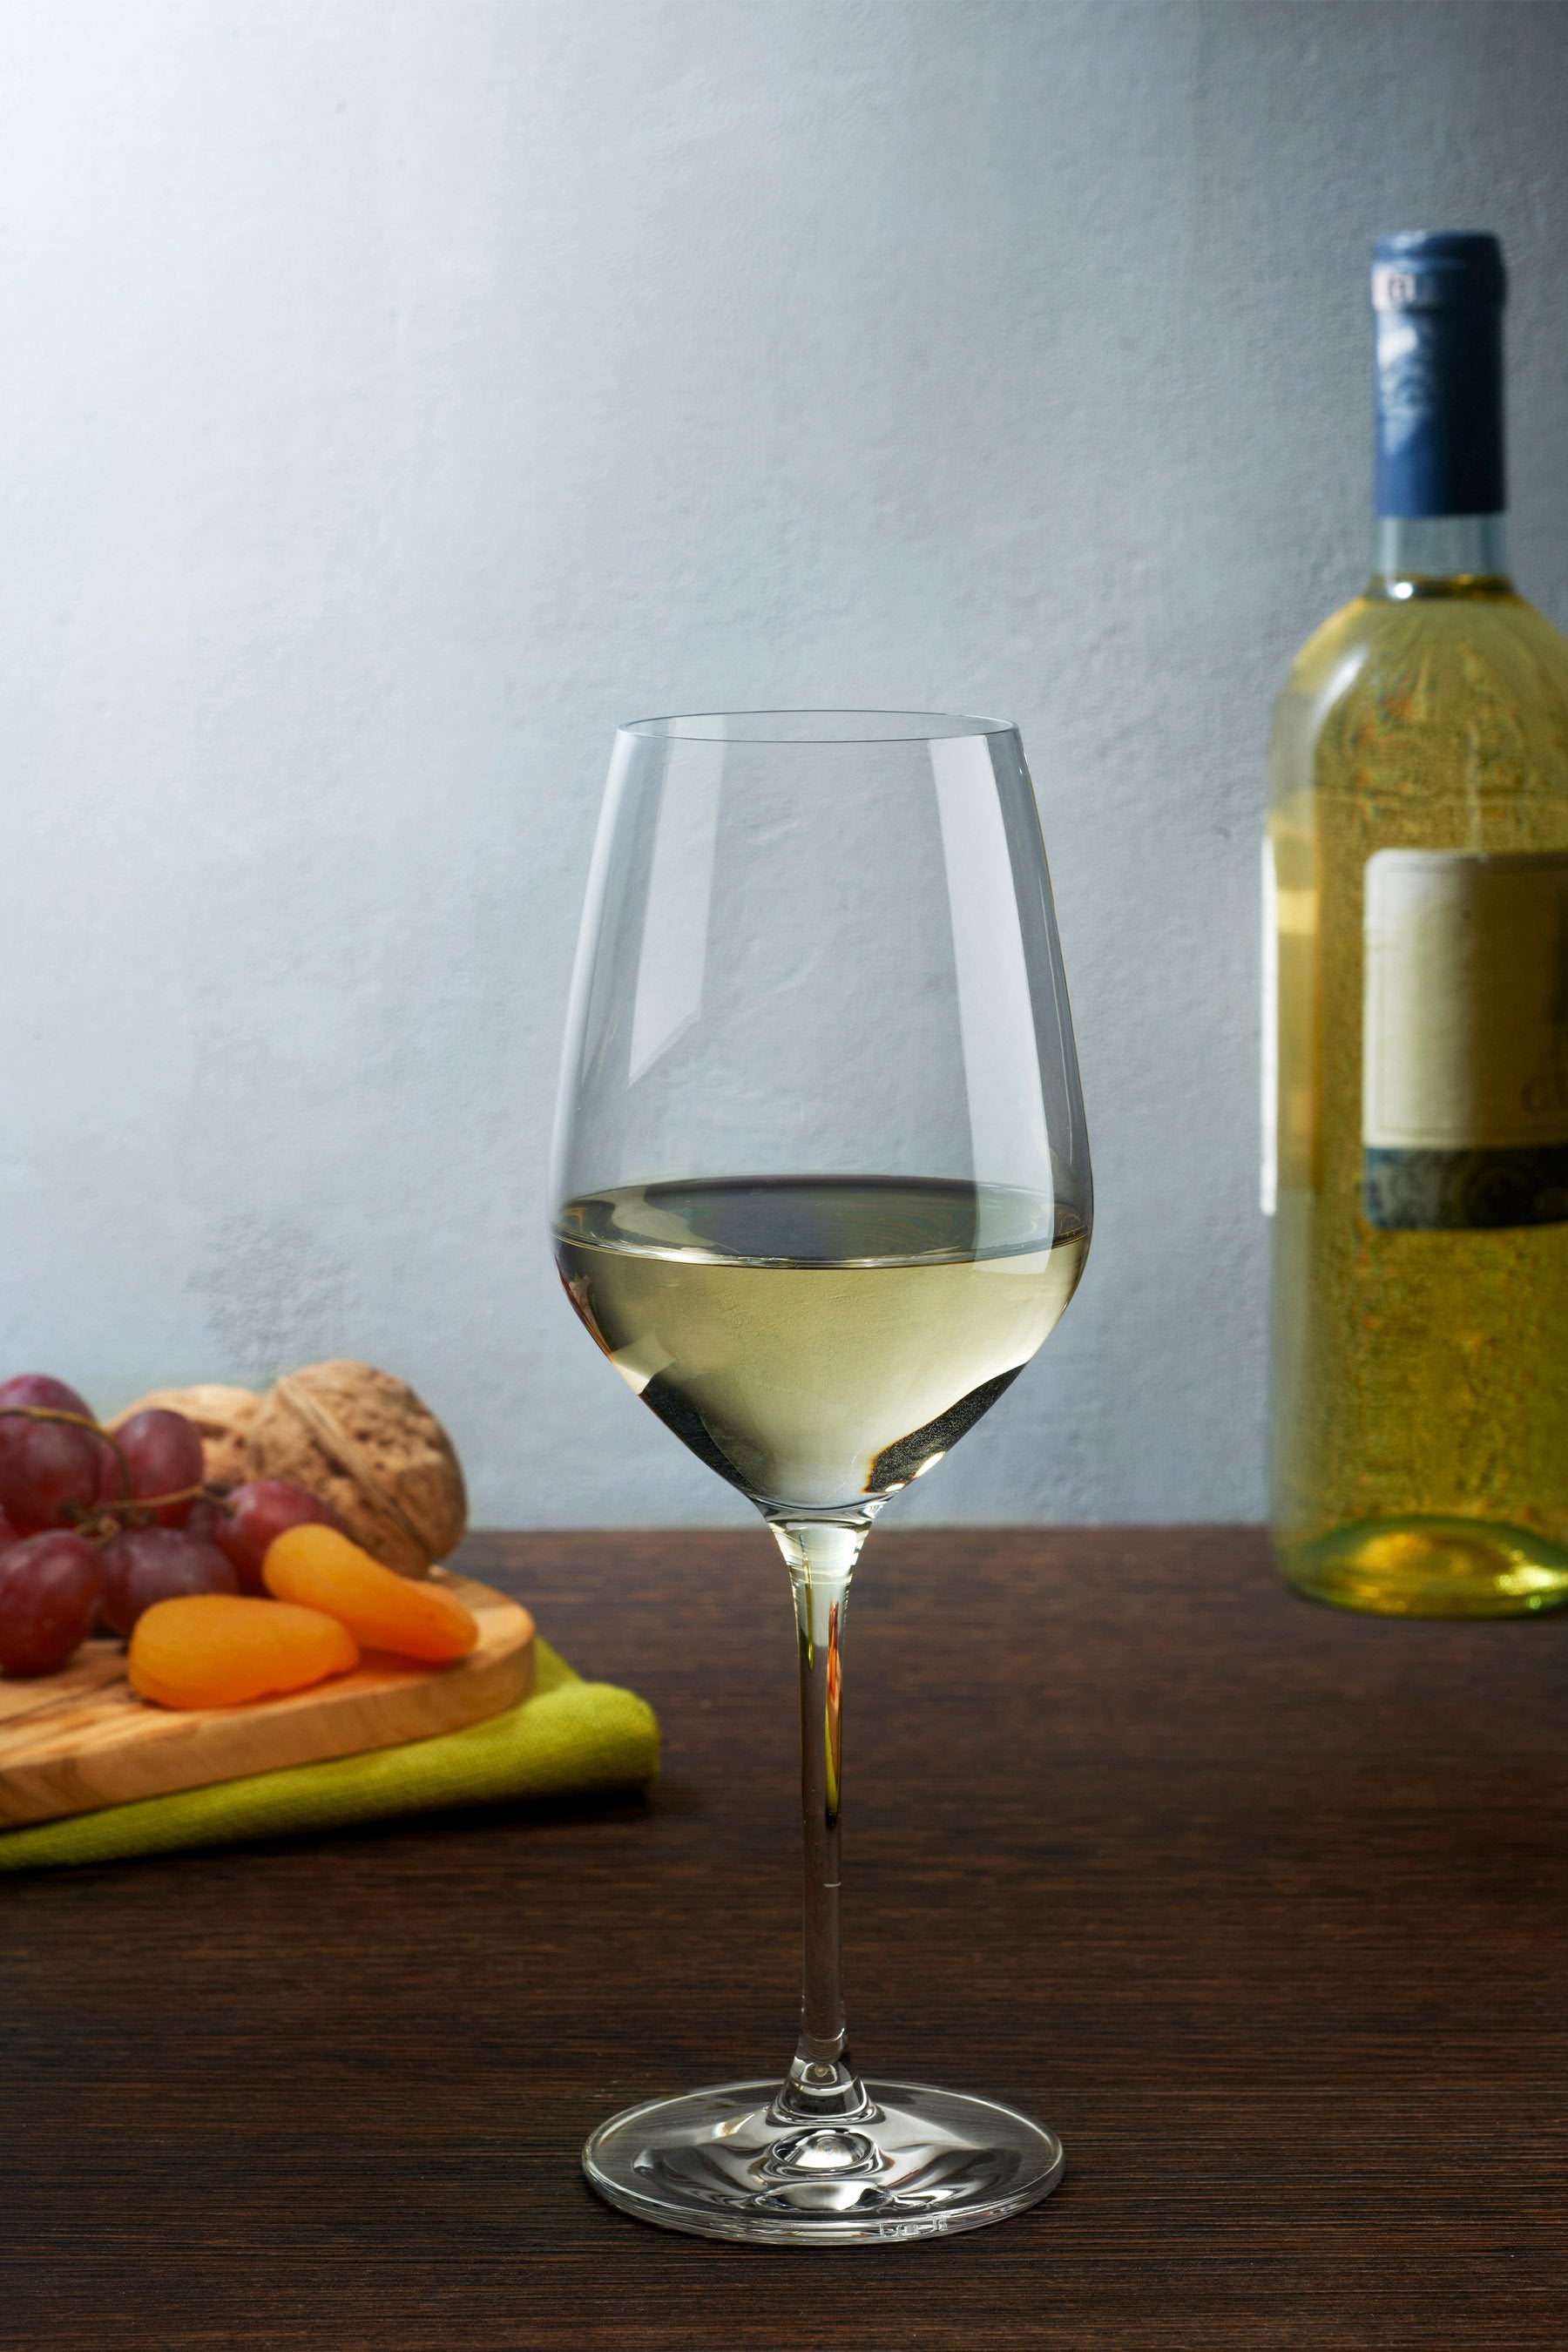 Climats İkili Beyaz Şarap Kadehi Seti 390 cc